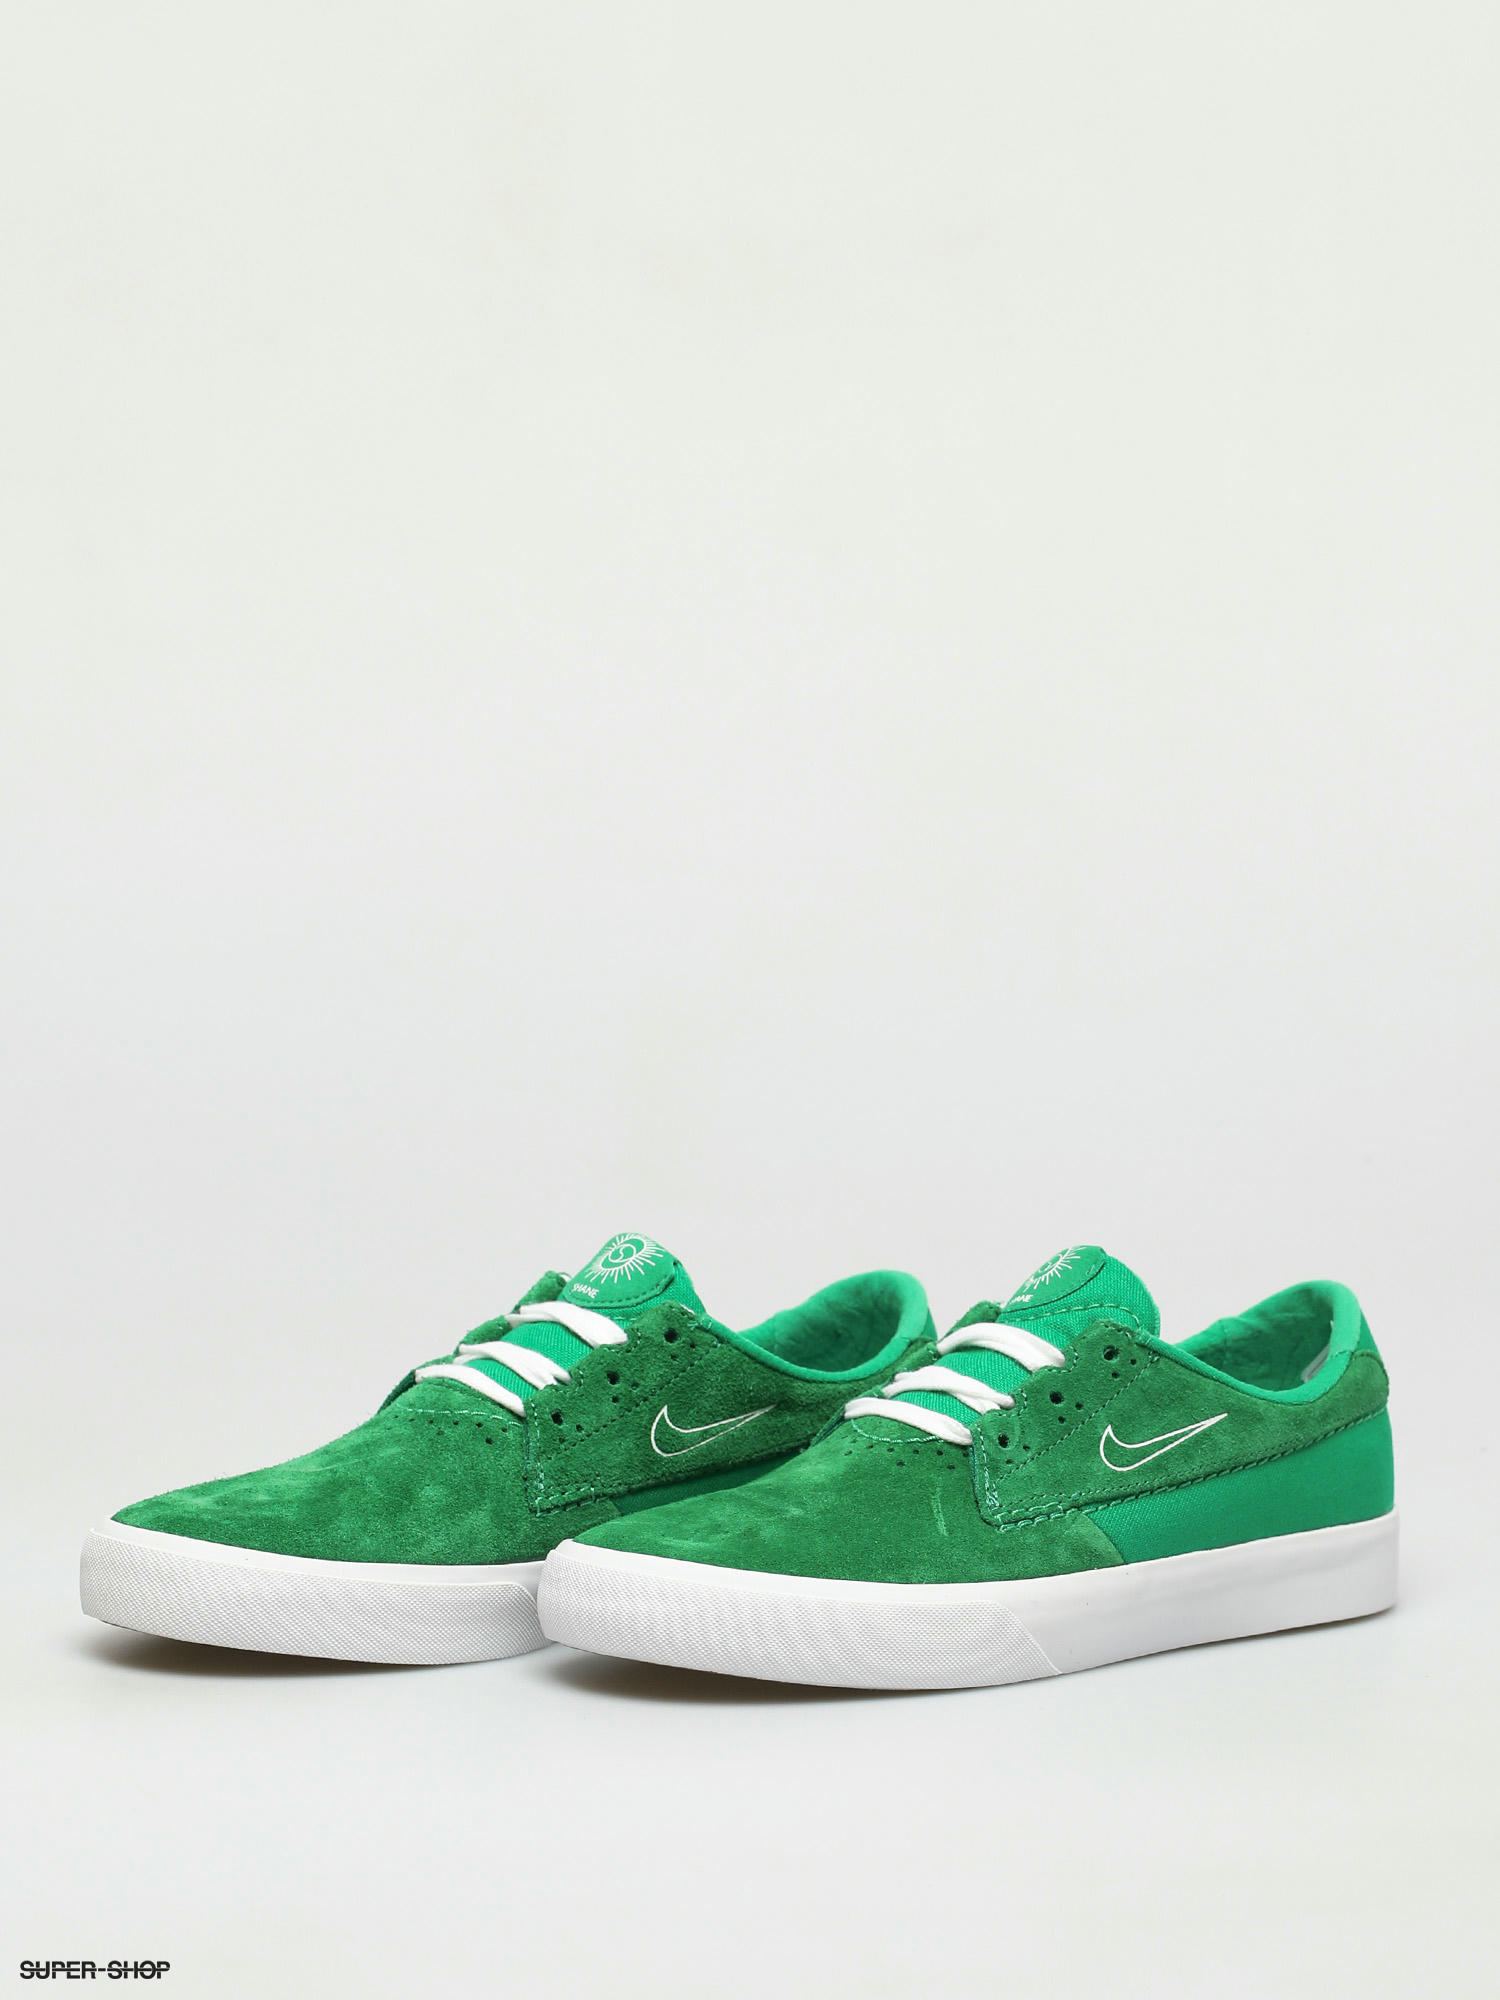 nike sb shoes green